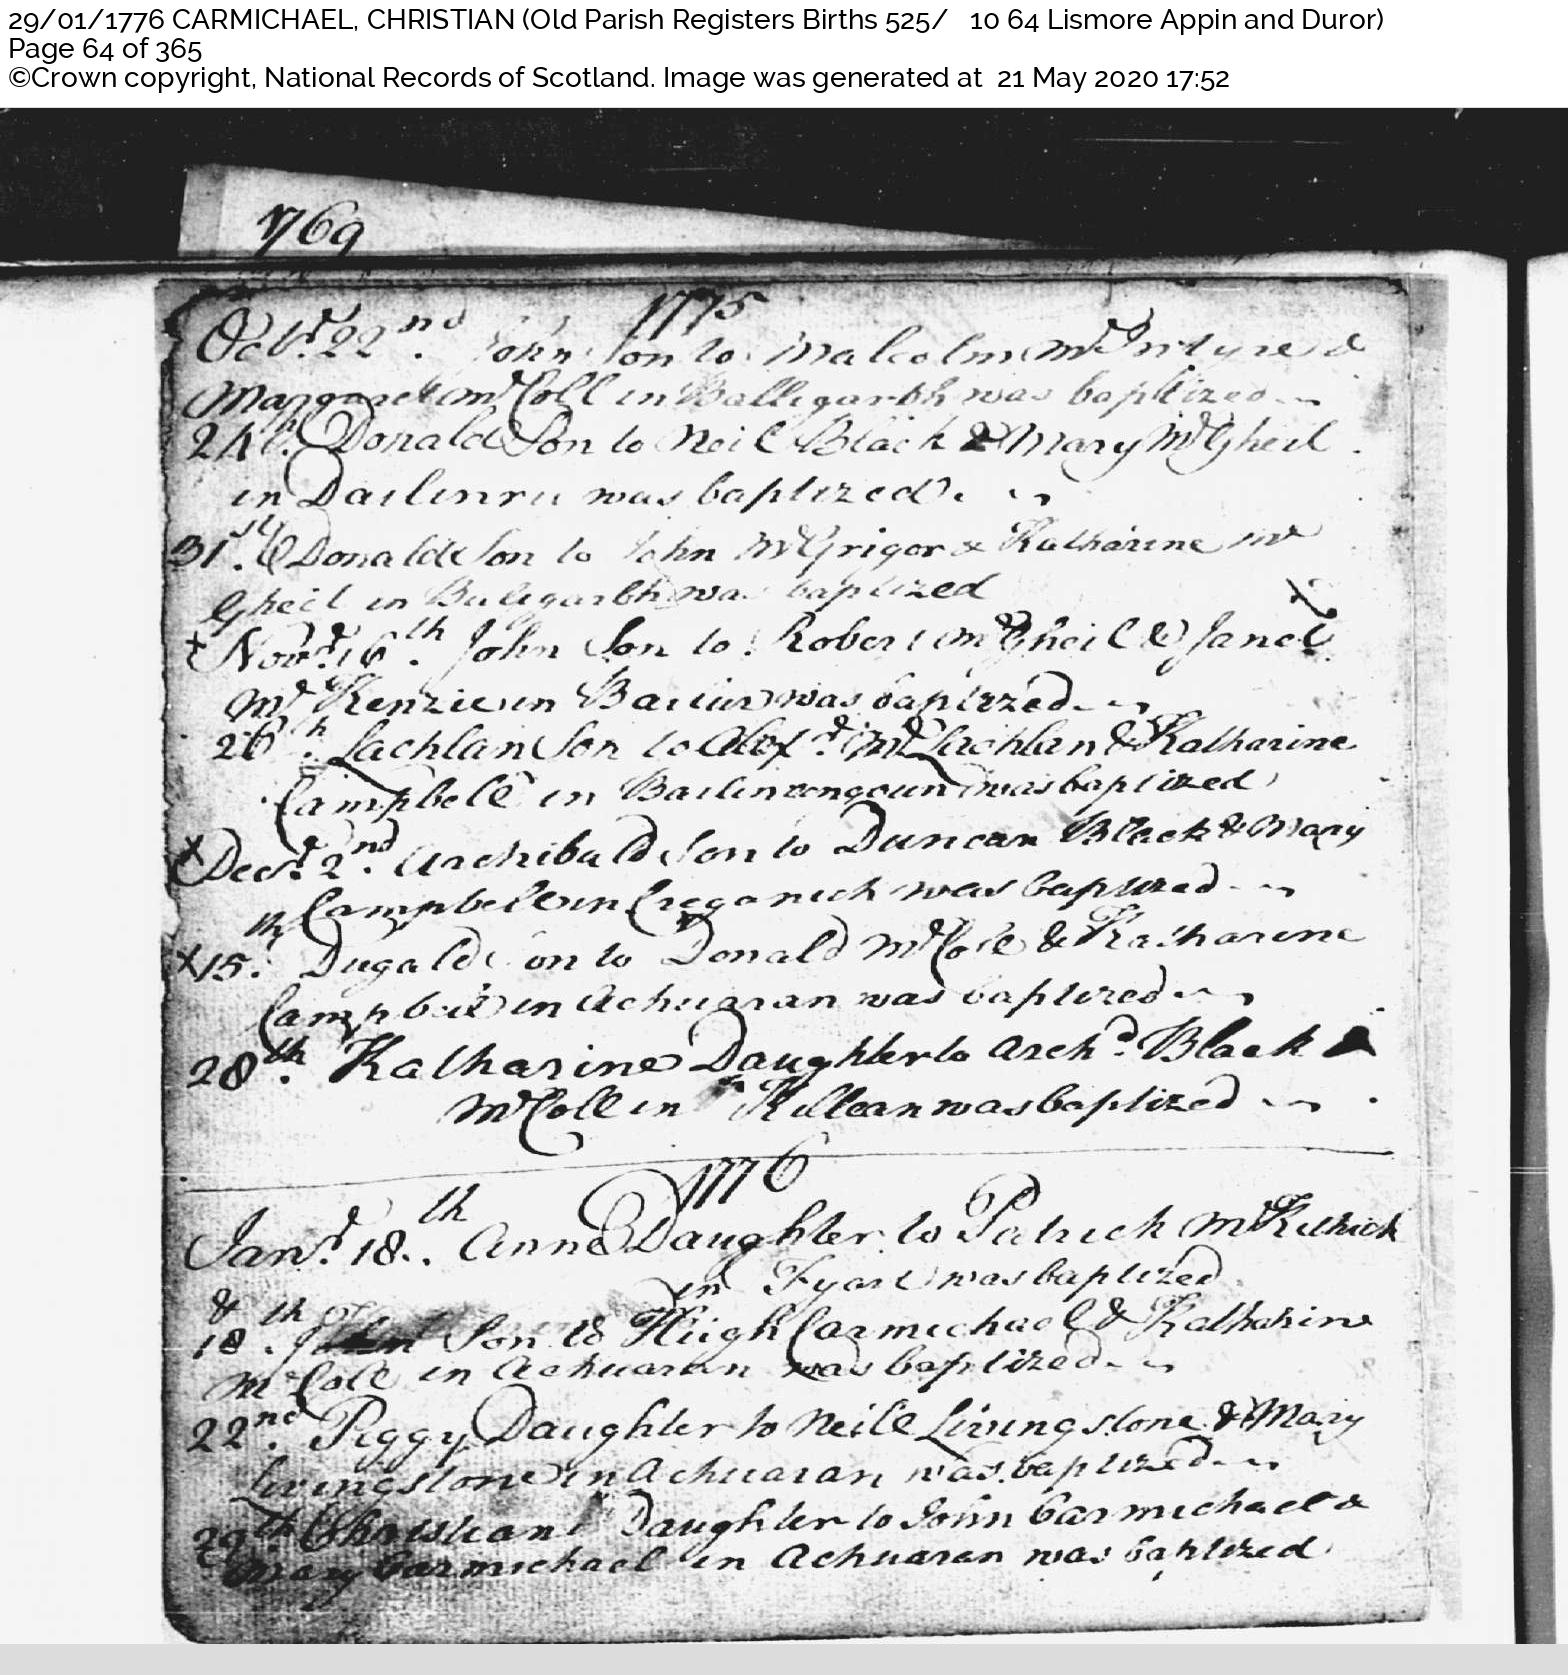 ChristianCarmichael_B1776 Achuaran Lismore, January 29, 1776